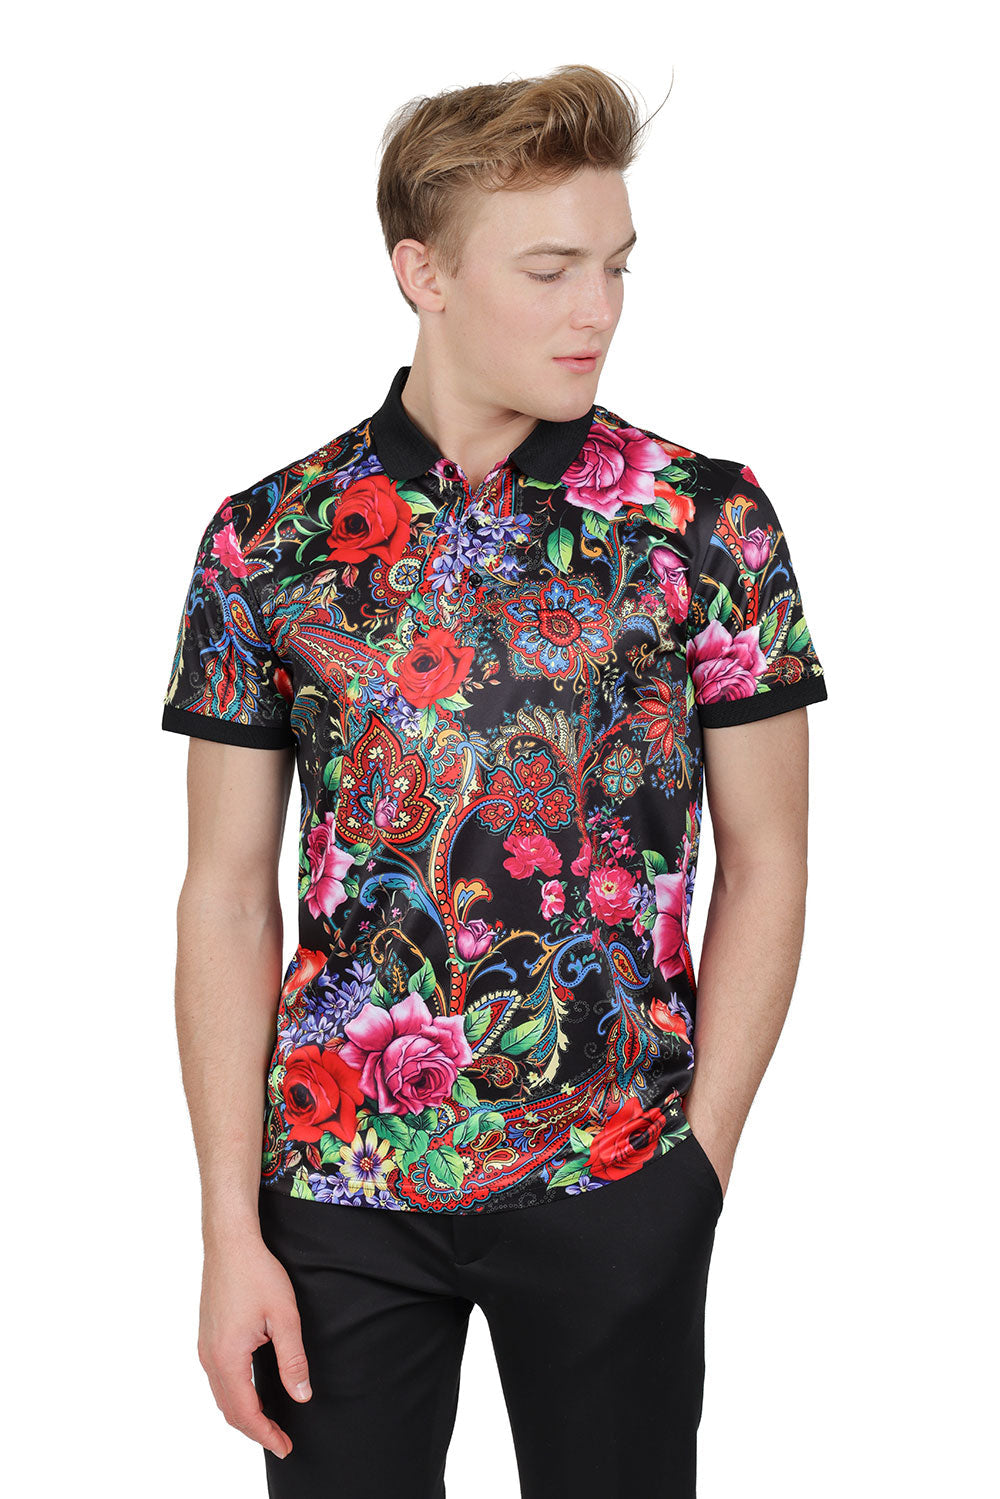 Barabas Men's Paisley Floral Print Design Luxury Polo Shirts PSP2039 Black